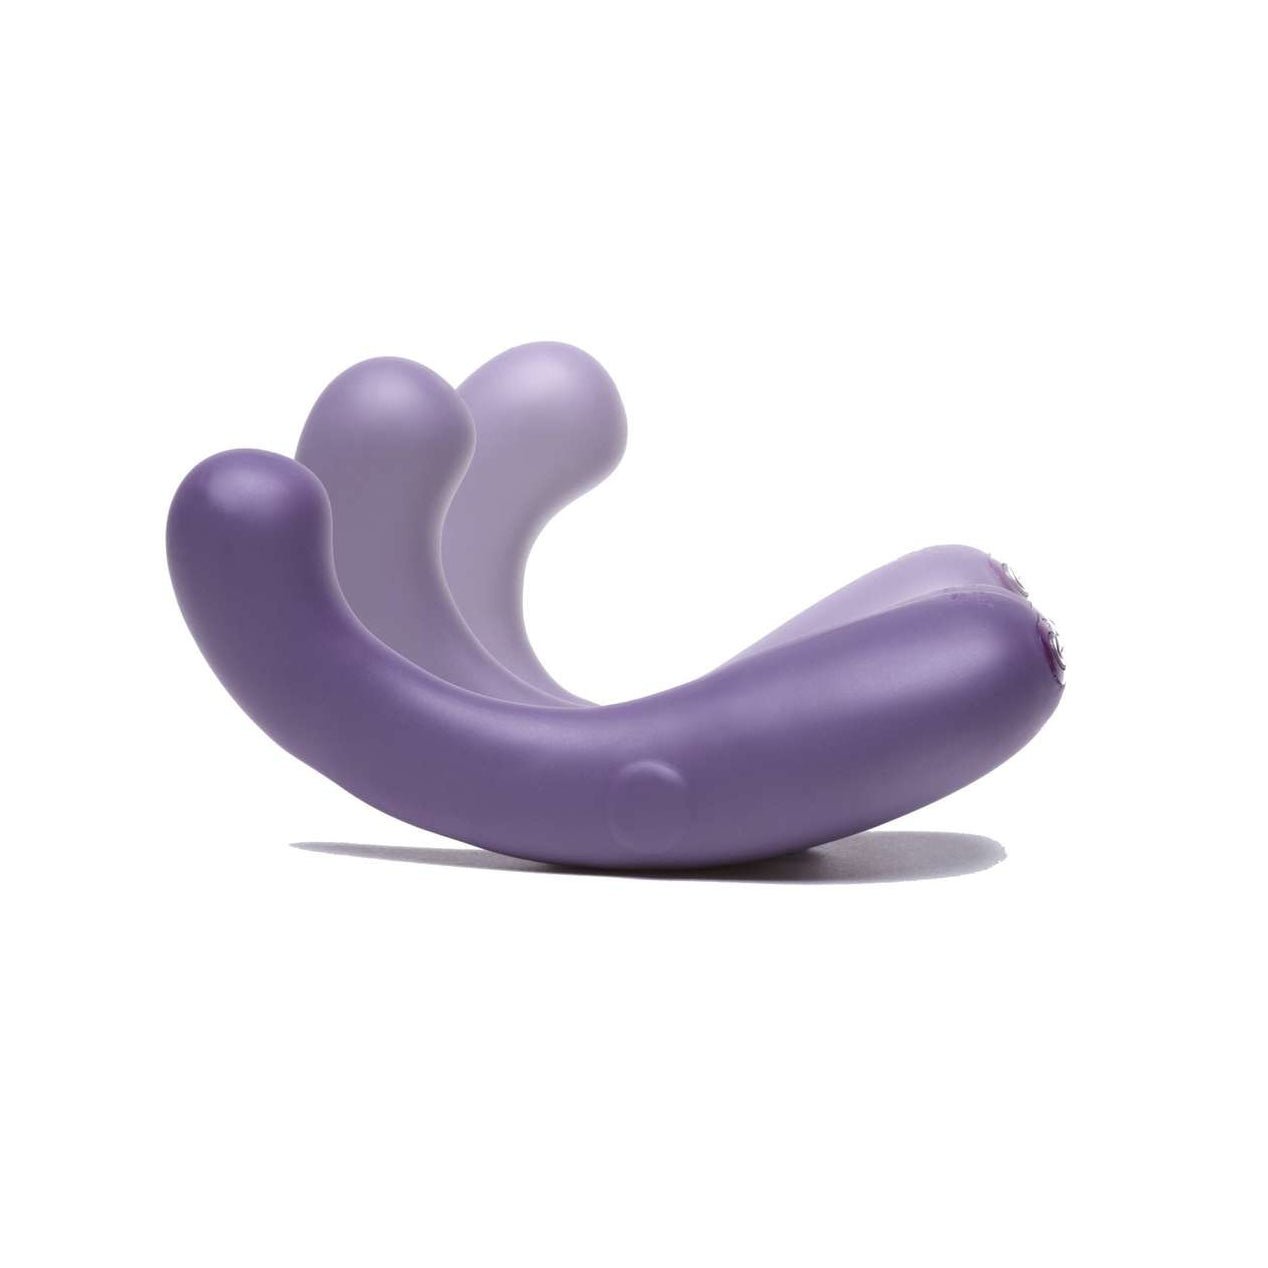 G-Kii Vibrator in purple extension image 